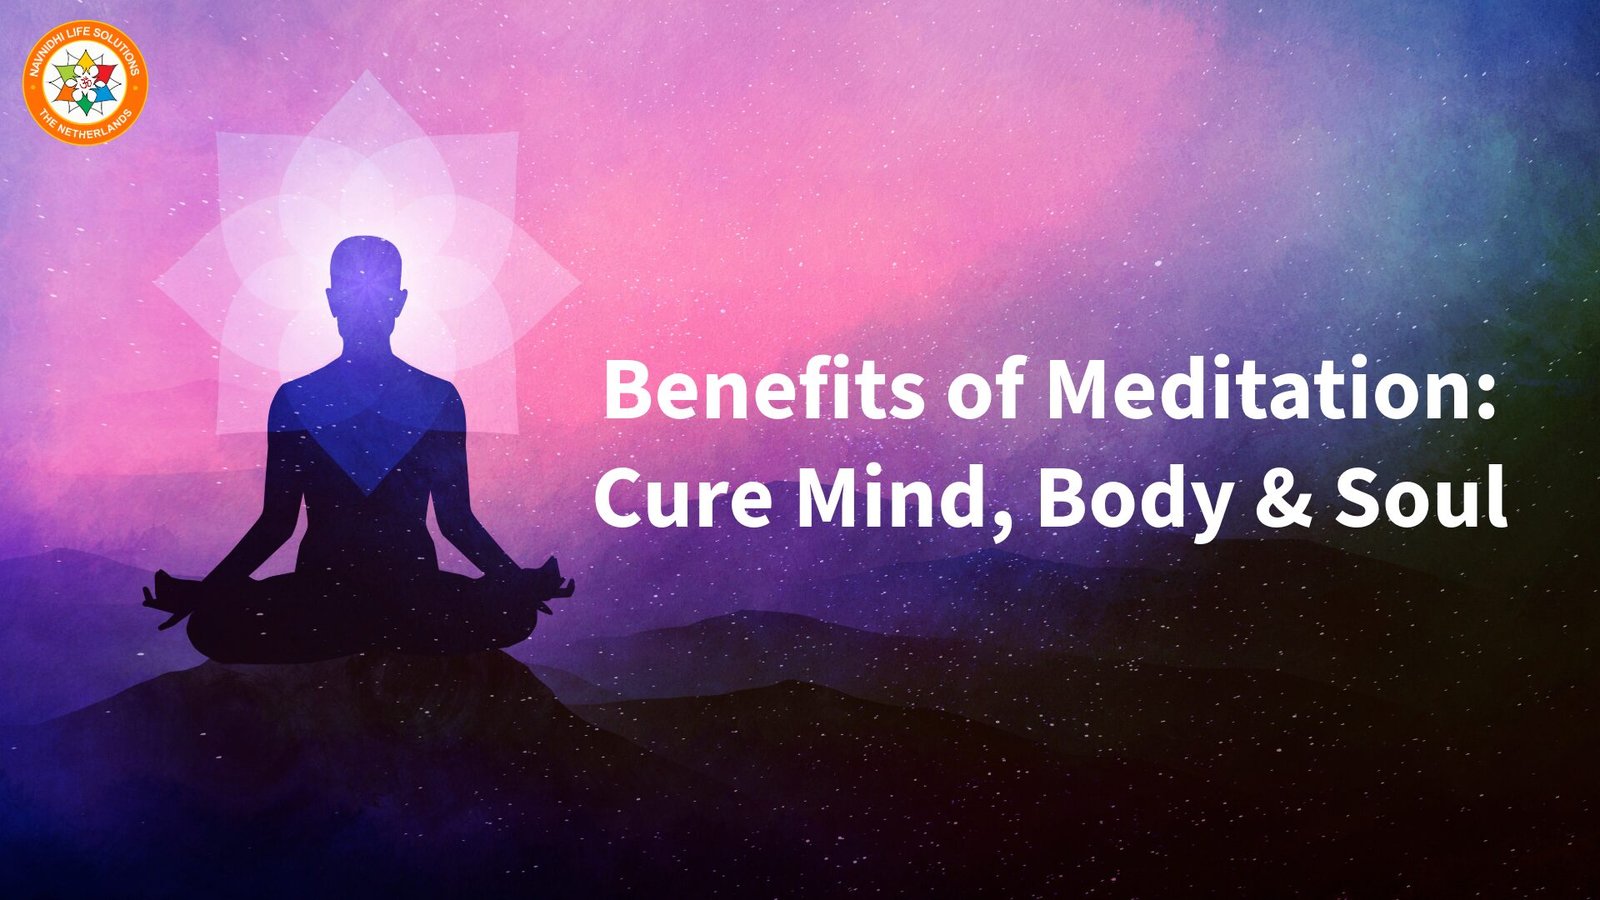 Amazing benefits of the meditation: Cure Mind, Body, & Soul